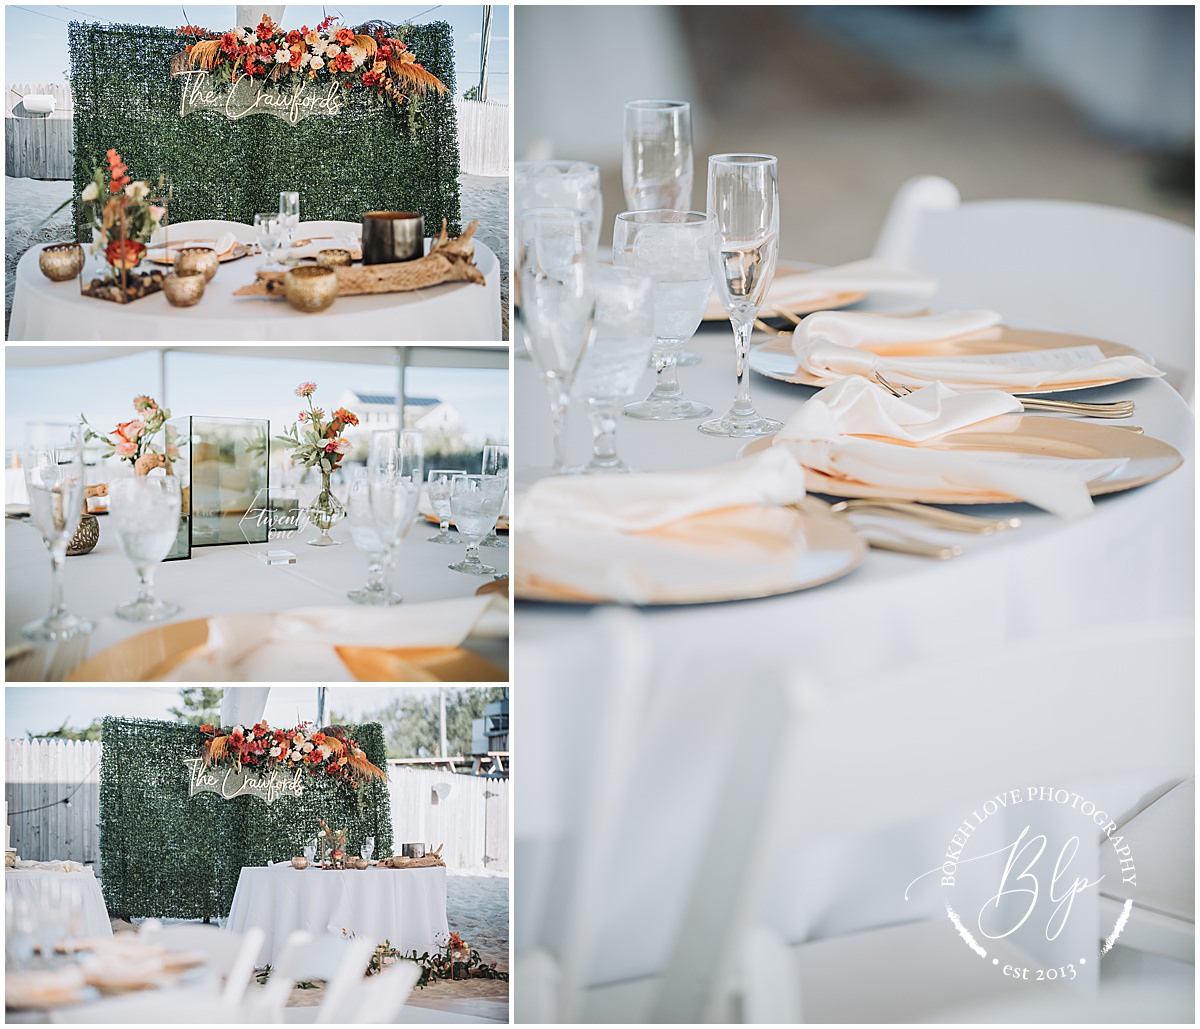 Bokeh Love Photography, Deauville Inn Wedding, wedding reception details, decorative plates, napkins, dinner menu, centerpieces